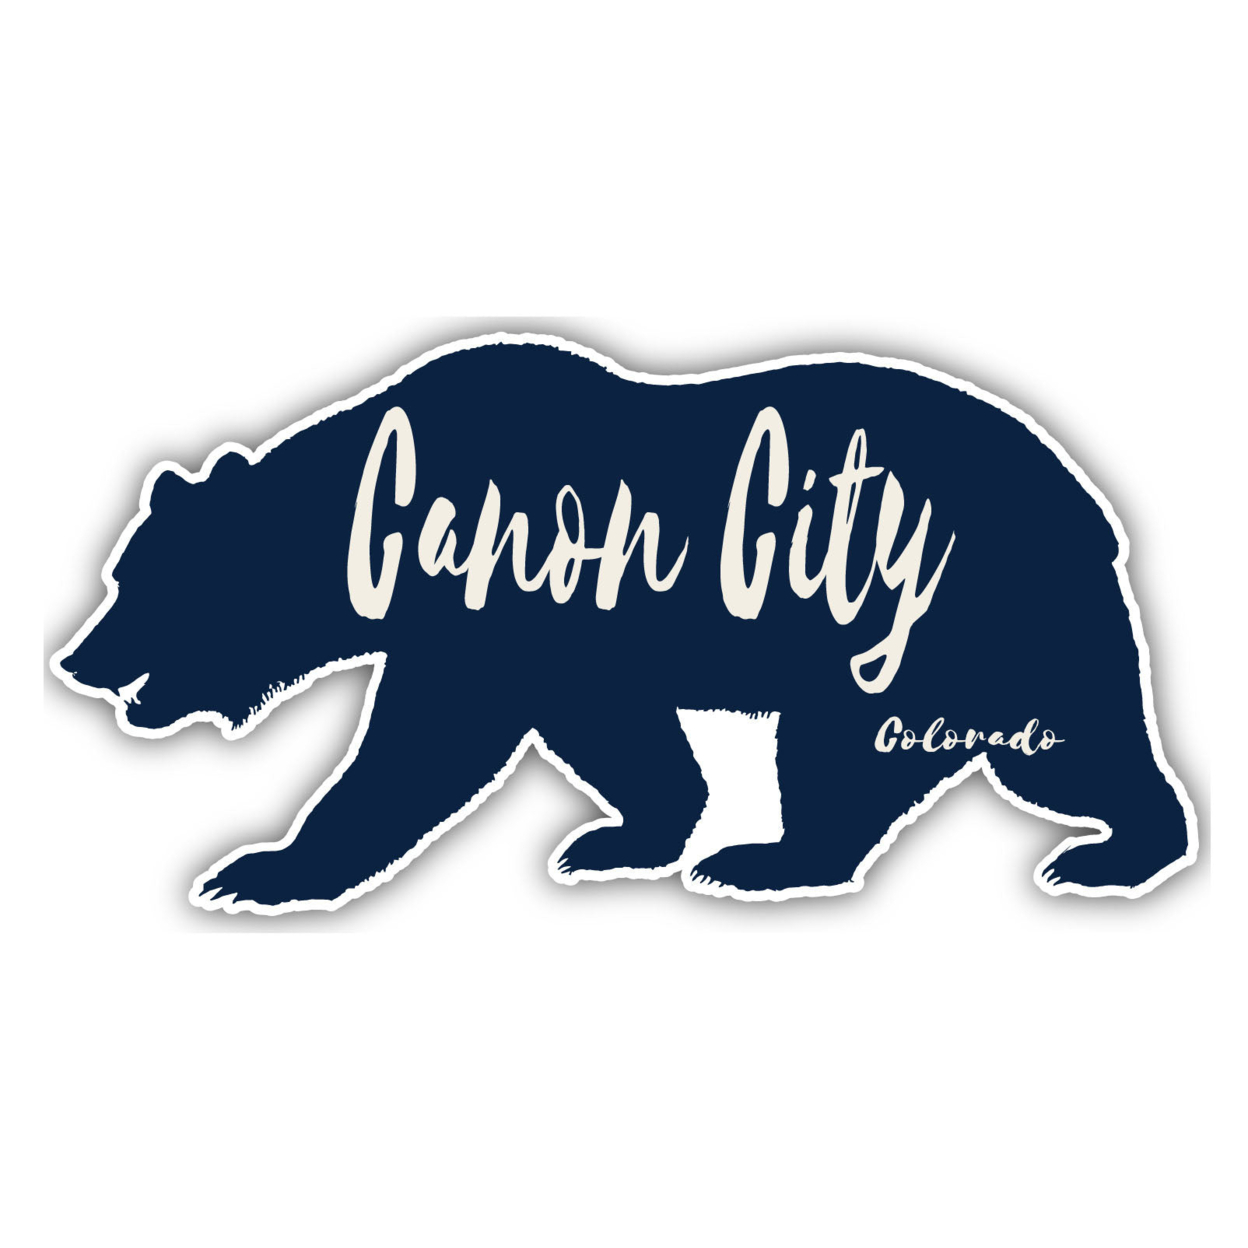 Canon City Colorado Souvenir Decorative Stickers (Choose Theme And Size) - Single Unit, 6-Inch, Camp Life